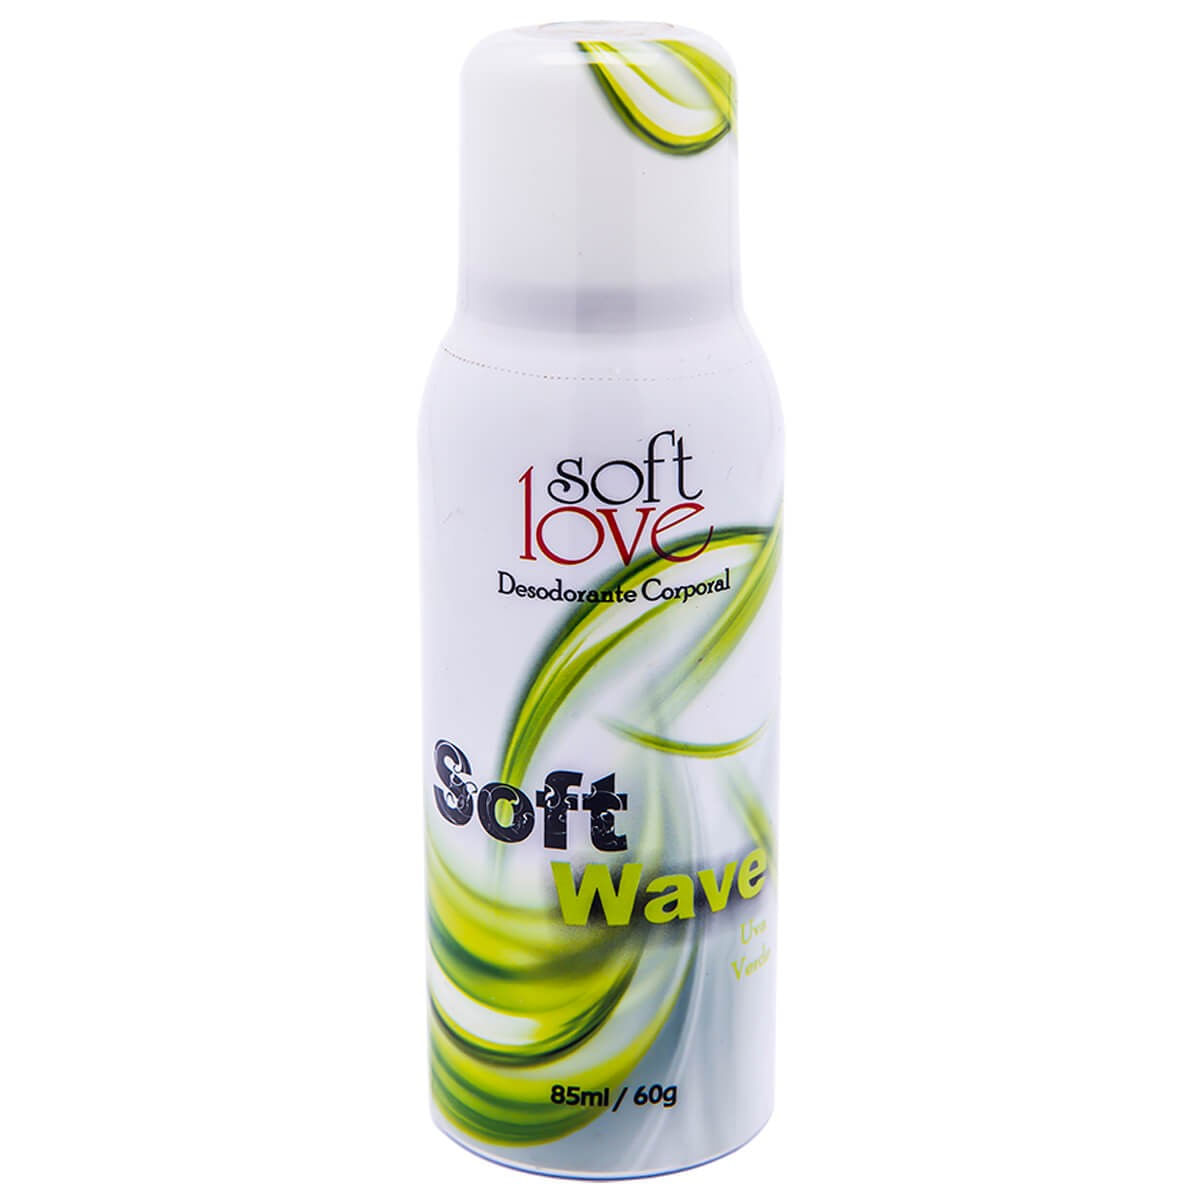 Soft Wave Uva Verde Desodorante Corporal 85ml/60g Soft Love